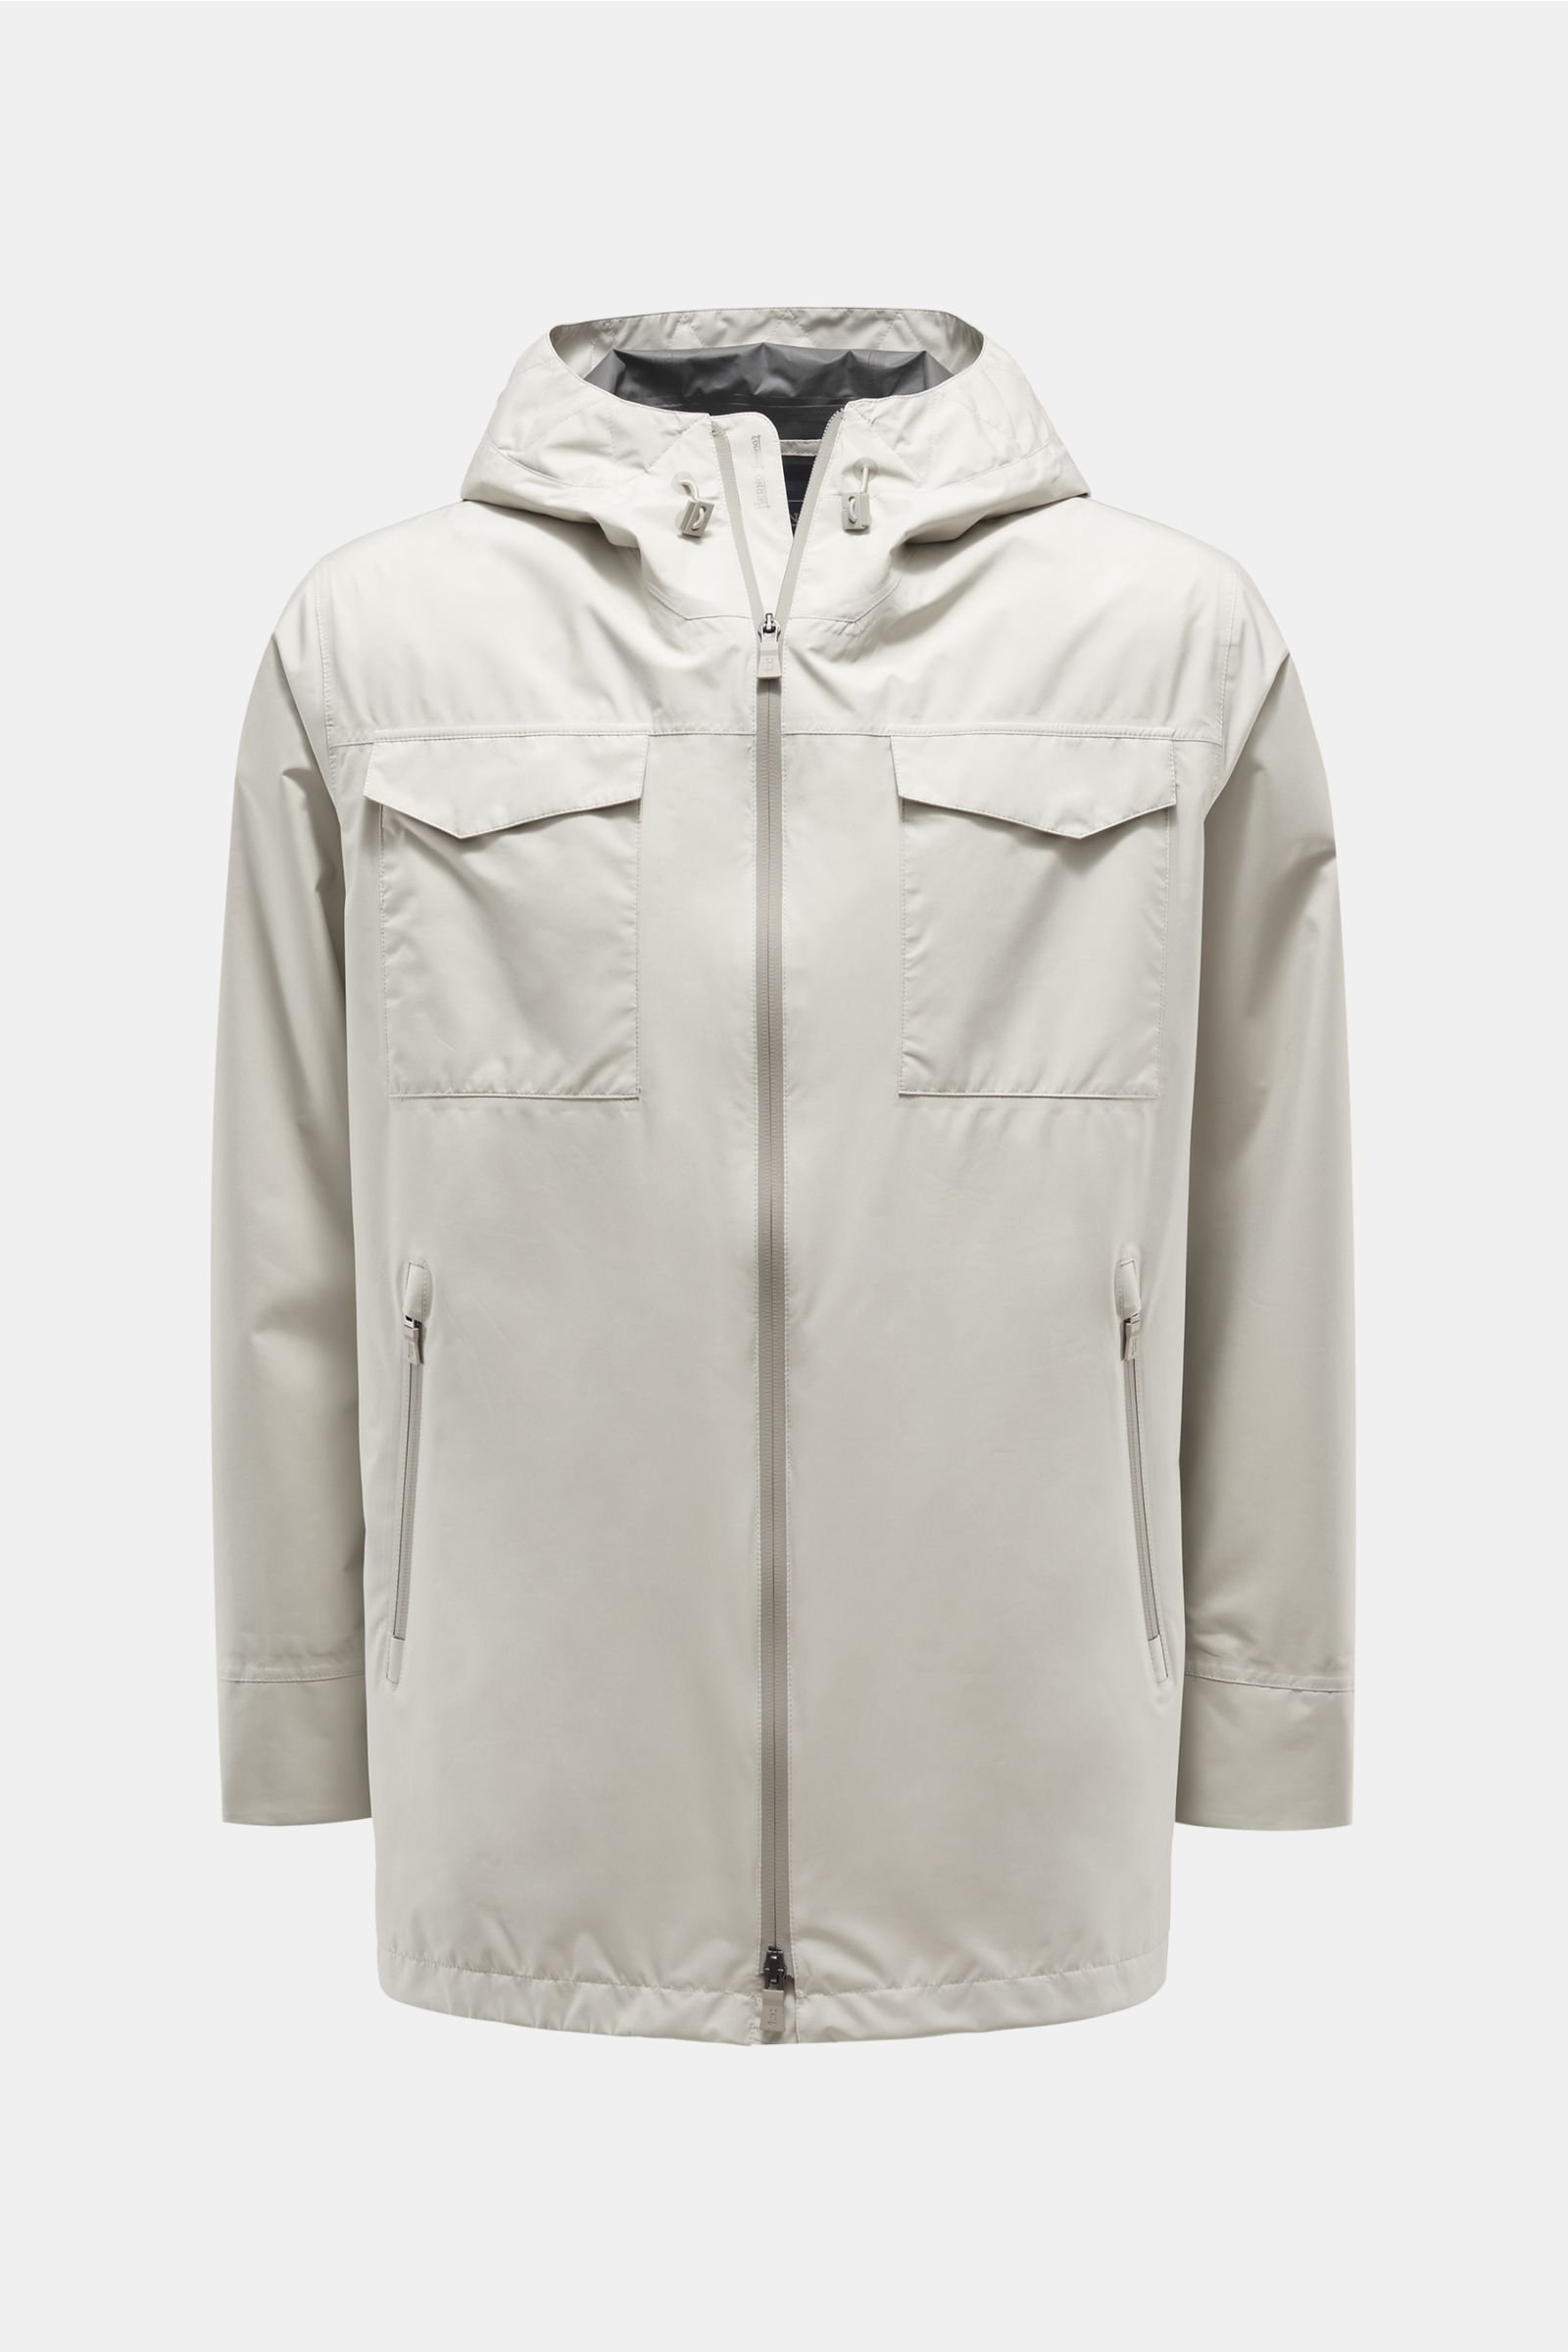 Jacket light grey